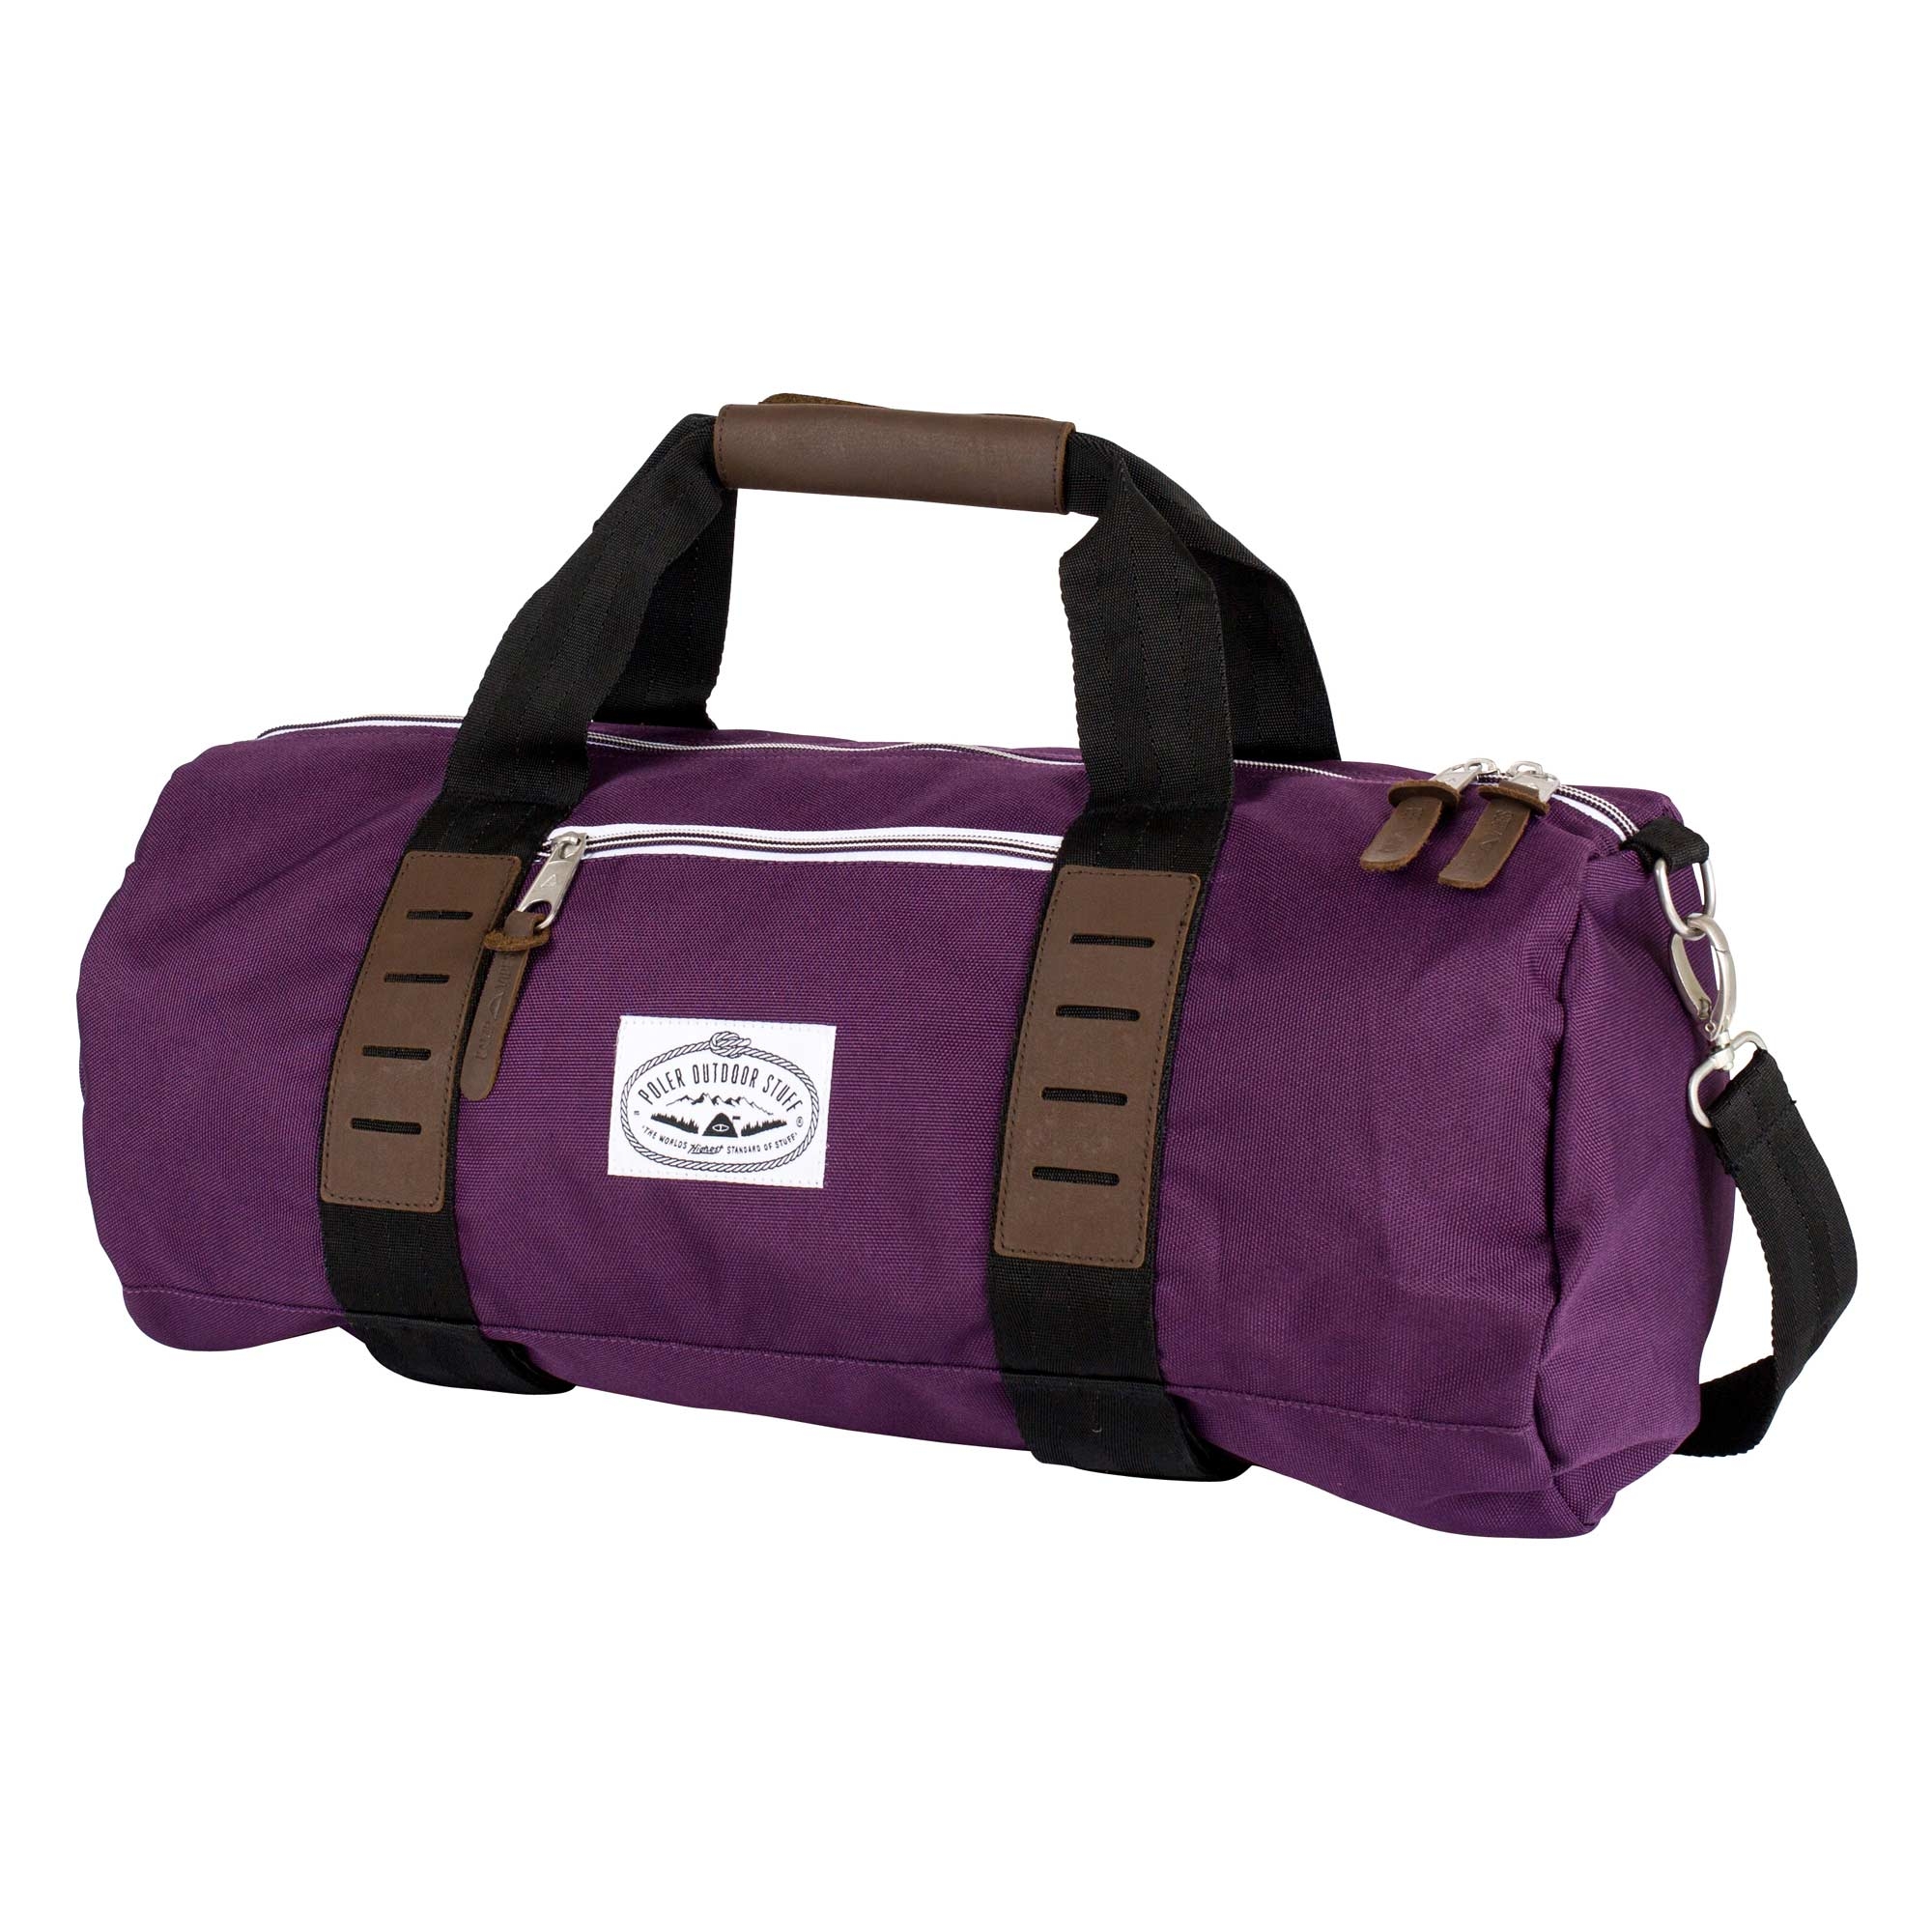 POLER Bag CLASSIC CARRY ON DUFFEL, purple